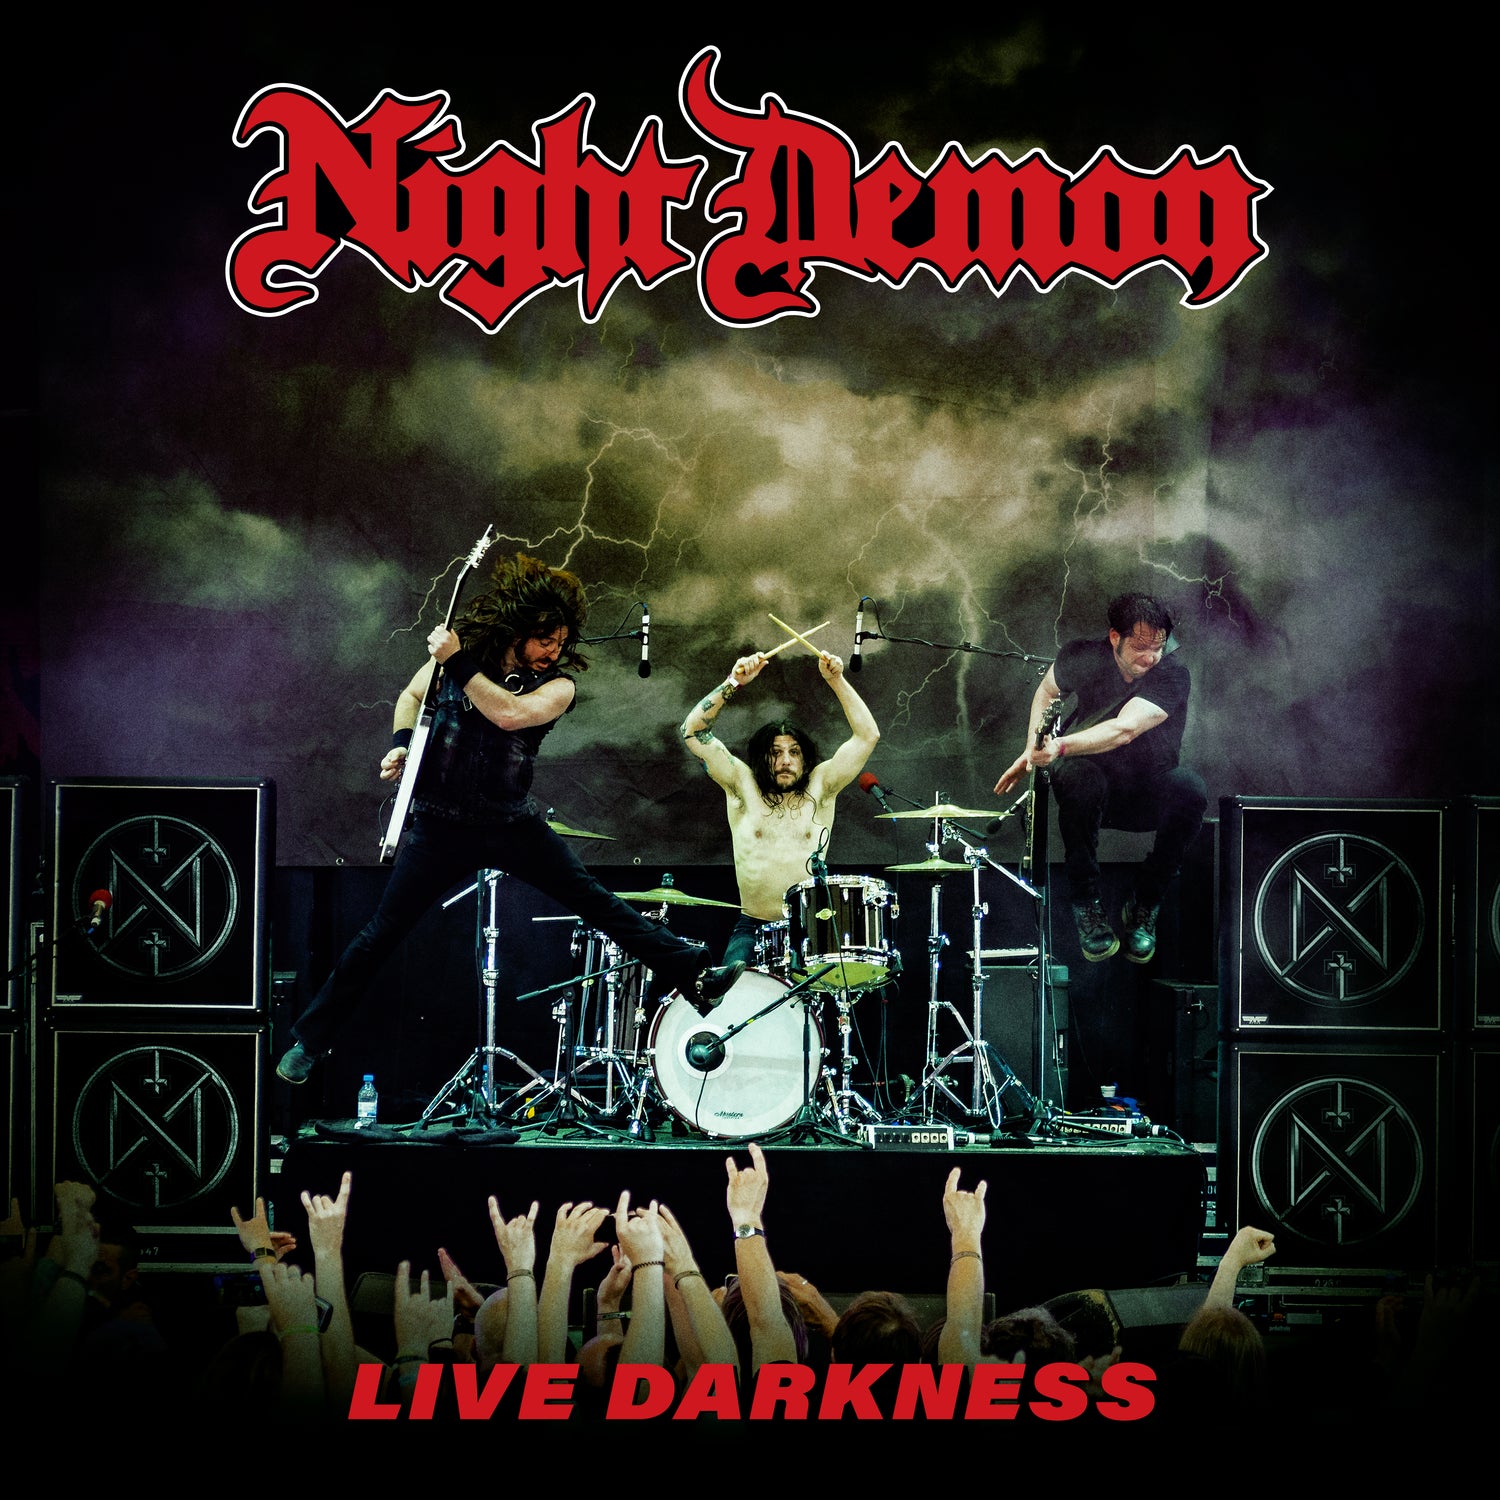 Night Demon